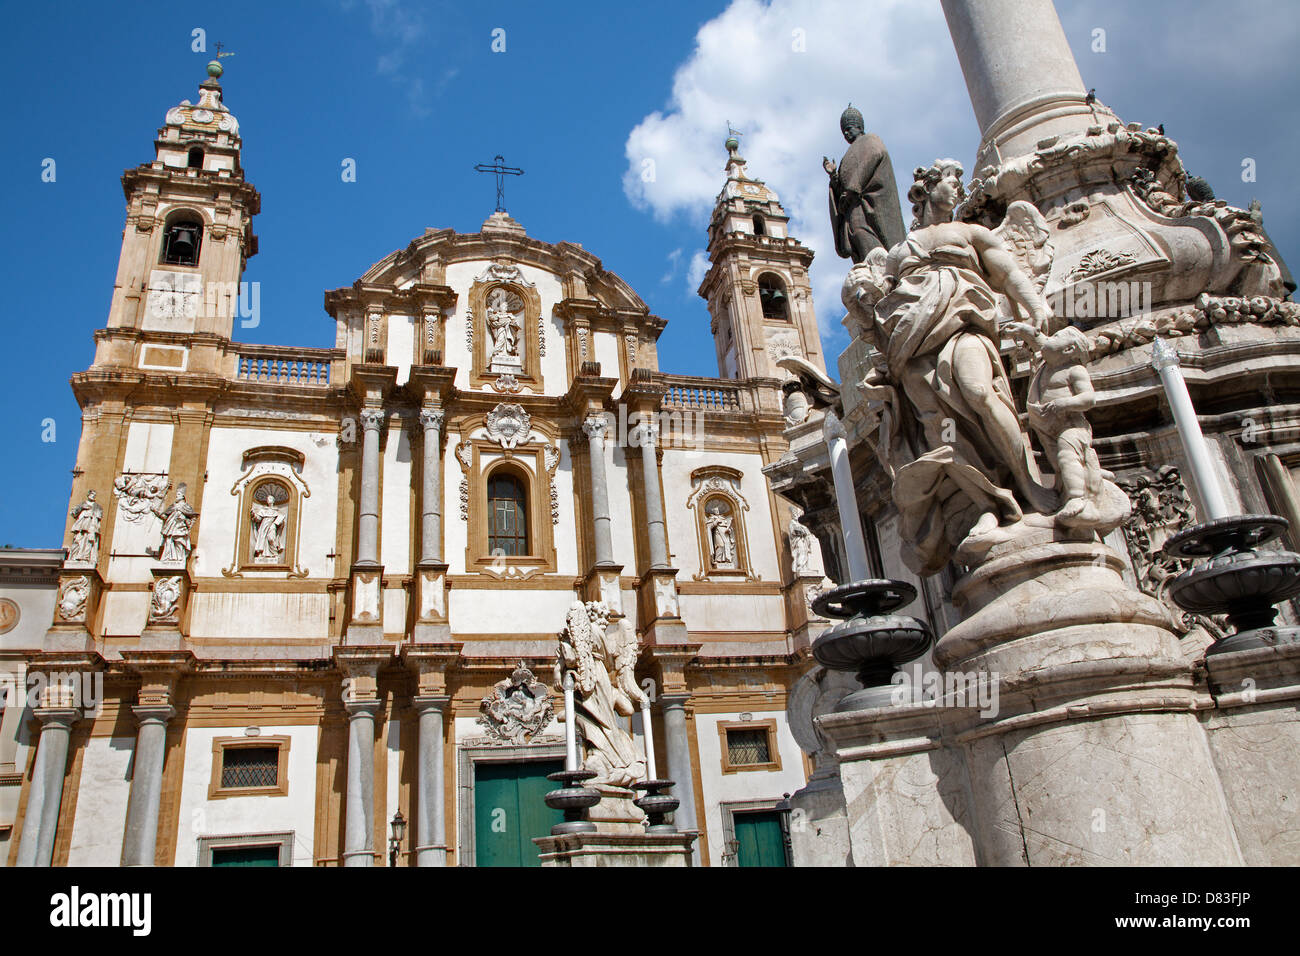 Palermo - San Domenico - Saint Dominic church and baroque column Stock Photo